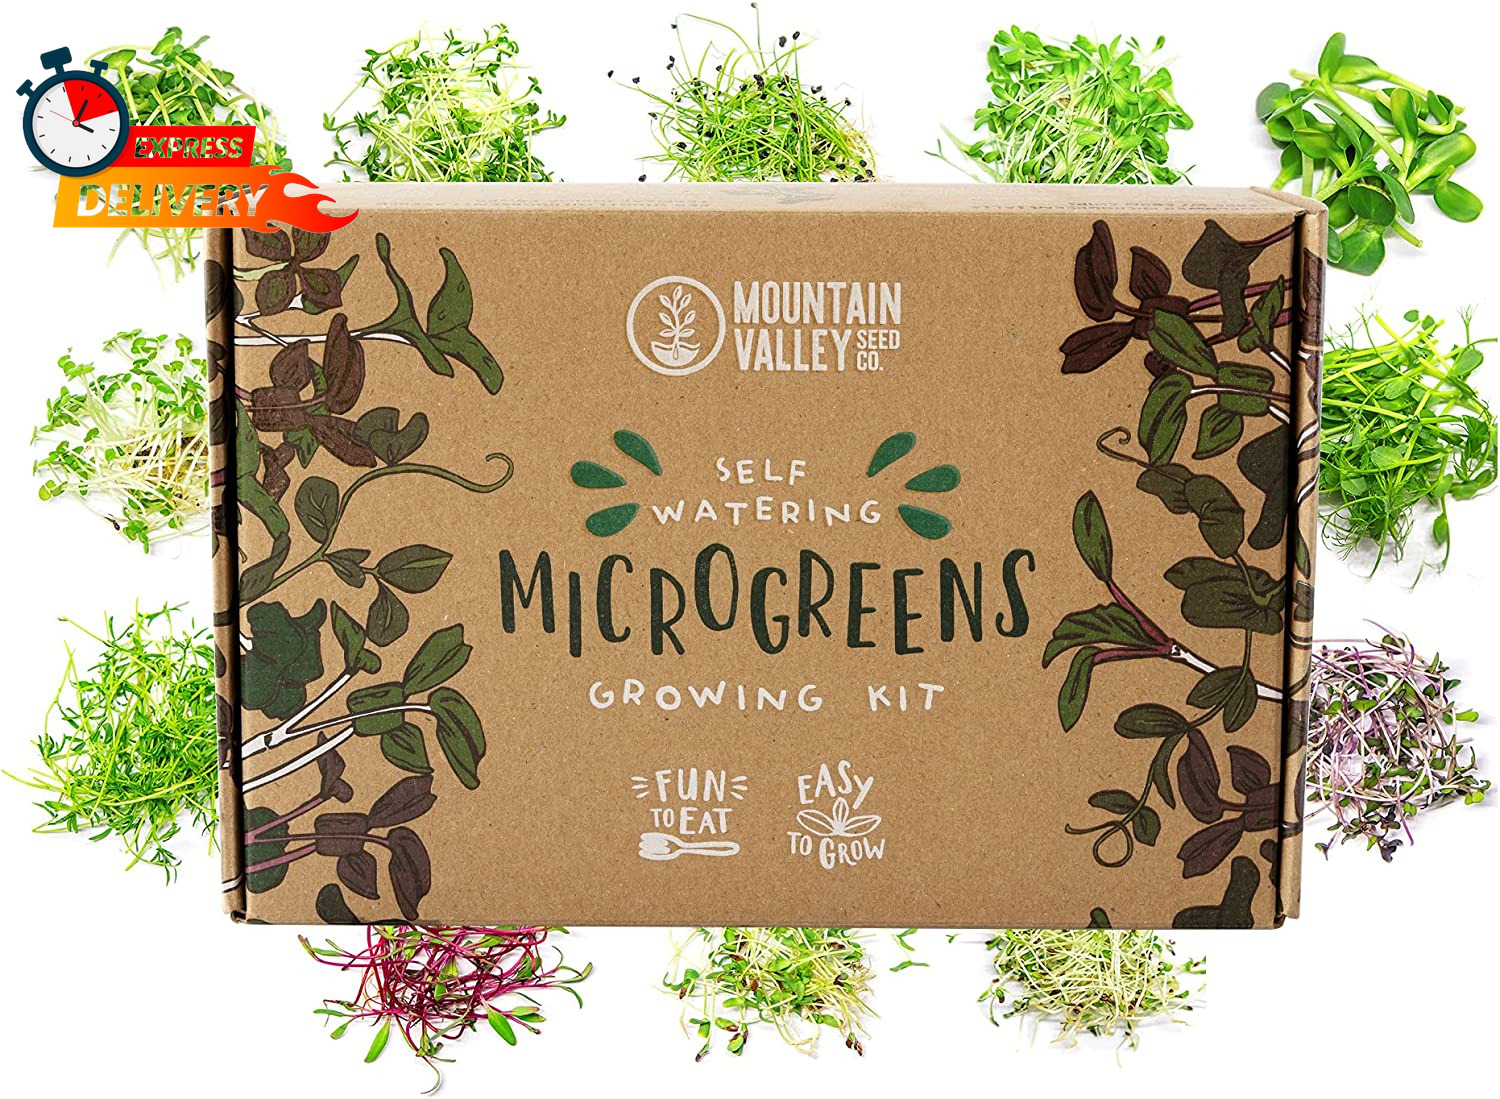 Self Watering Indoor Microgreens Kit - Complete Soil Microgreens Growing Kit for